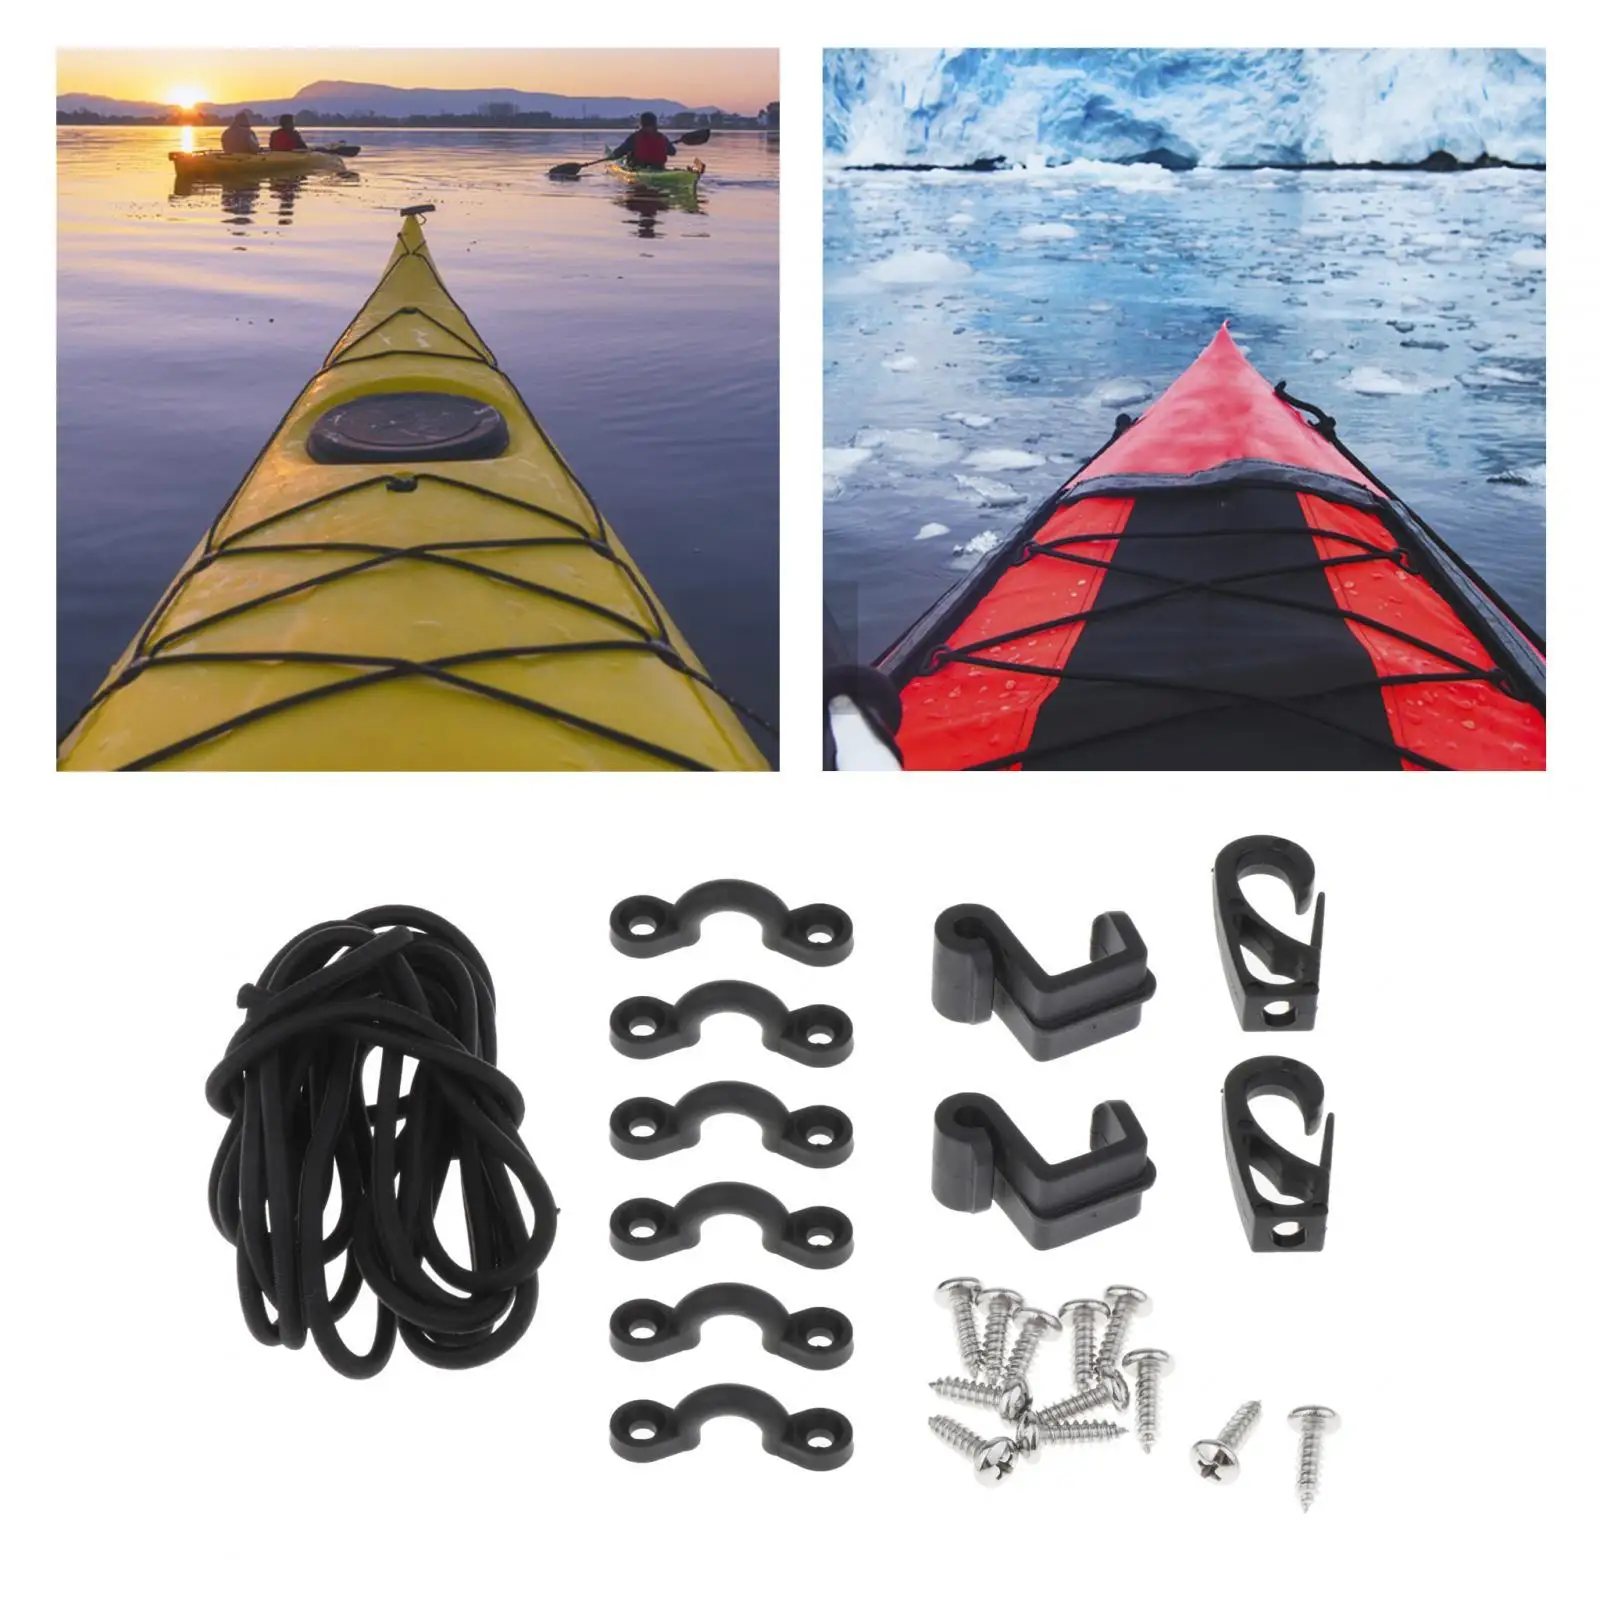 Kayak Deck Rigging Set Premium Fishing Storage Bungee Set Durable Canoes Kayak Accessories Boat with 12 Screws Tie Down Pad Eye